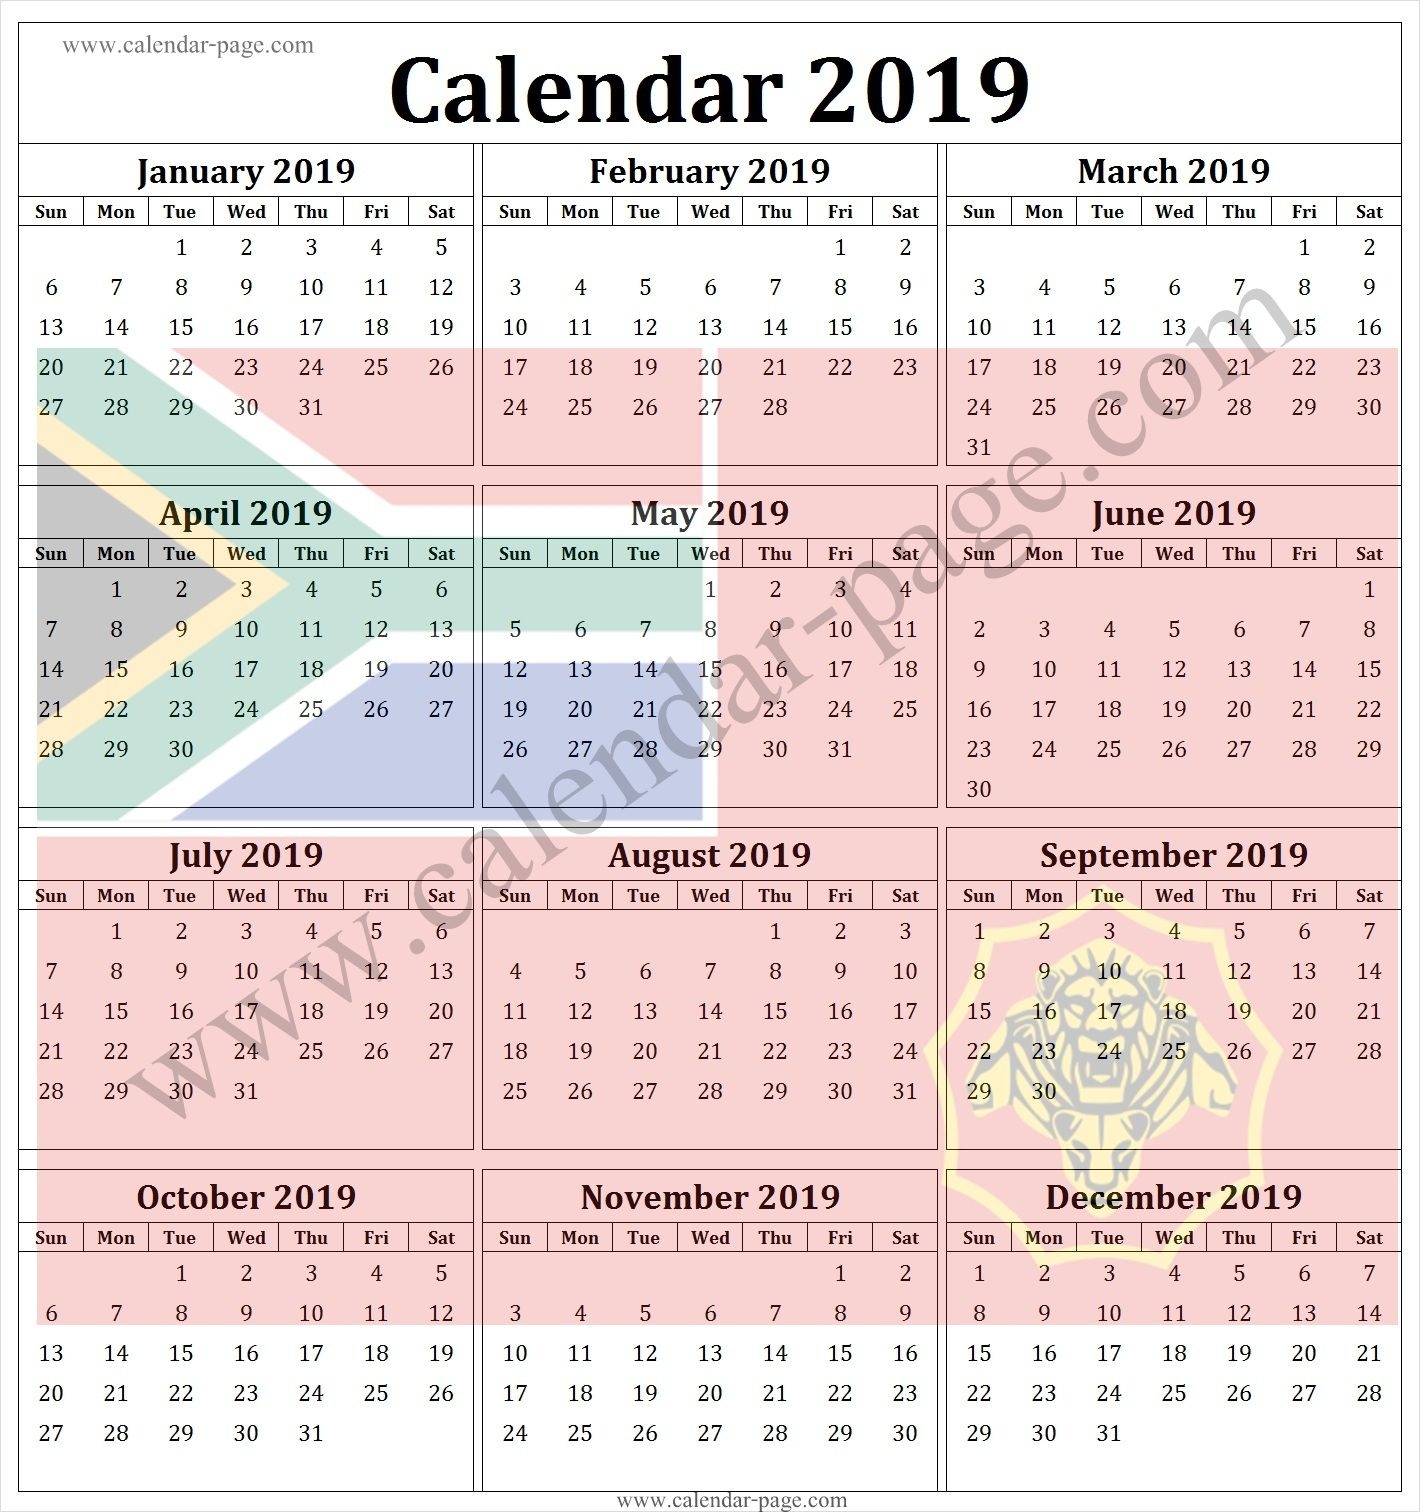 south-africa-2019-calendar-with-public-holidays-qualads